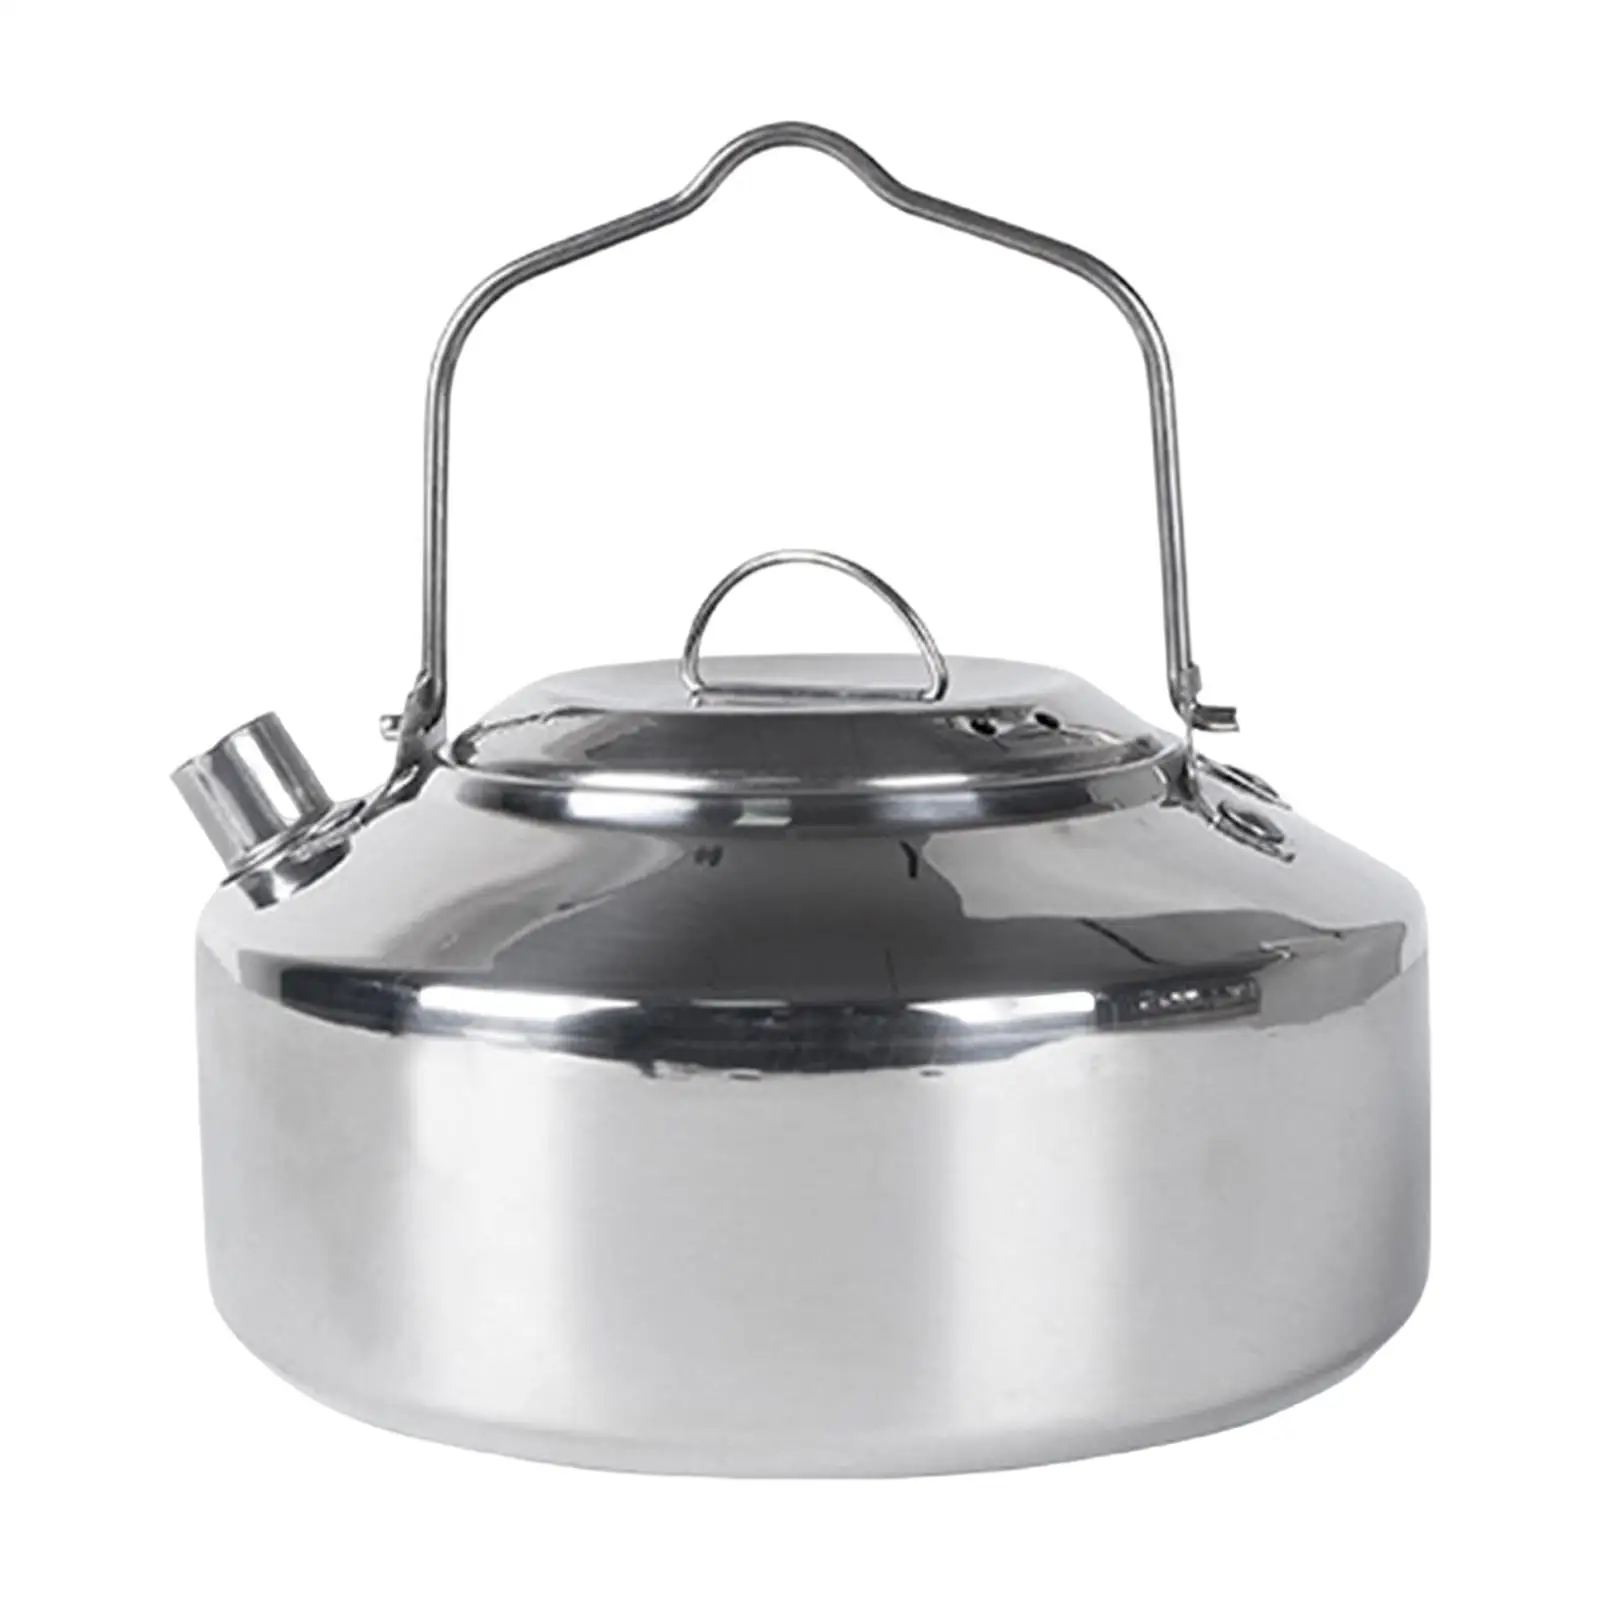 Water Boiler Teapot Compact Kitchenware Teakettle Tea Kettle Portable Camping